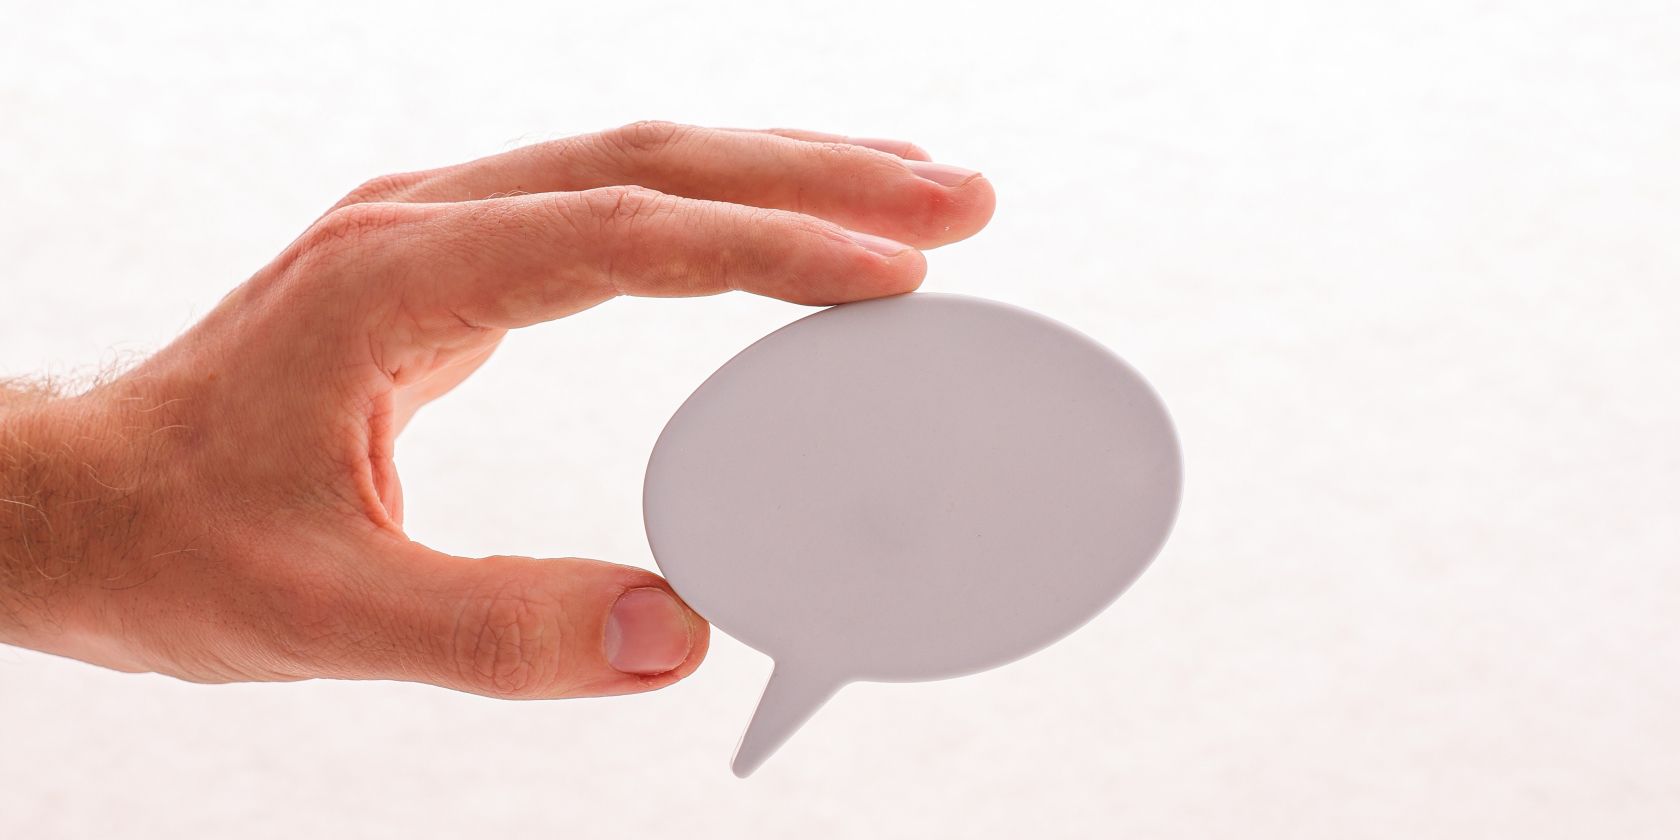 A hand holding a paper cutout of a speech bubble